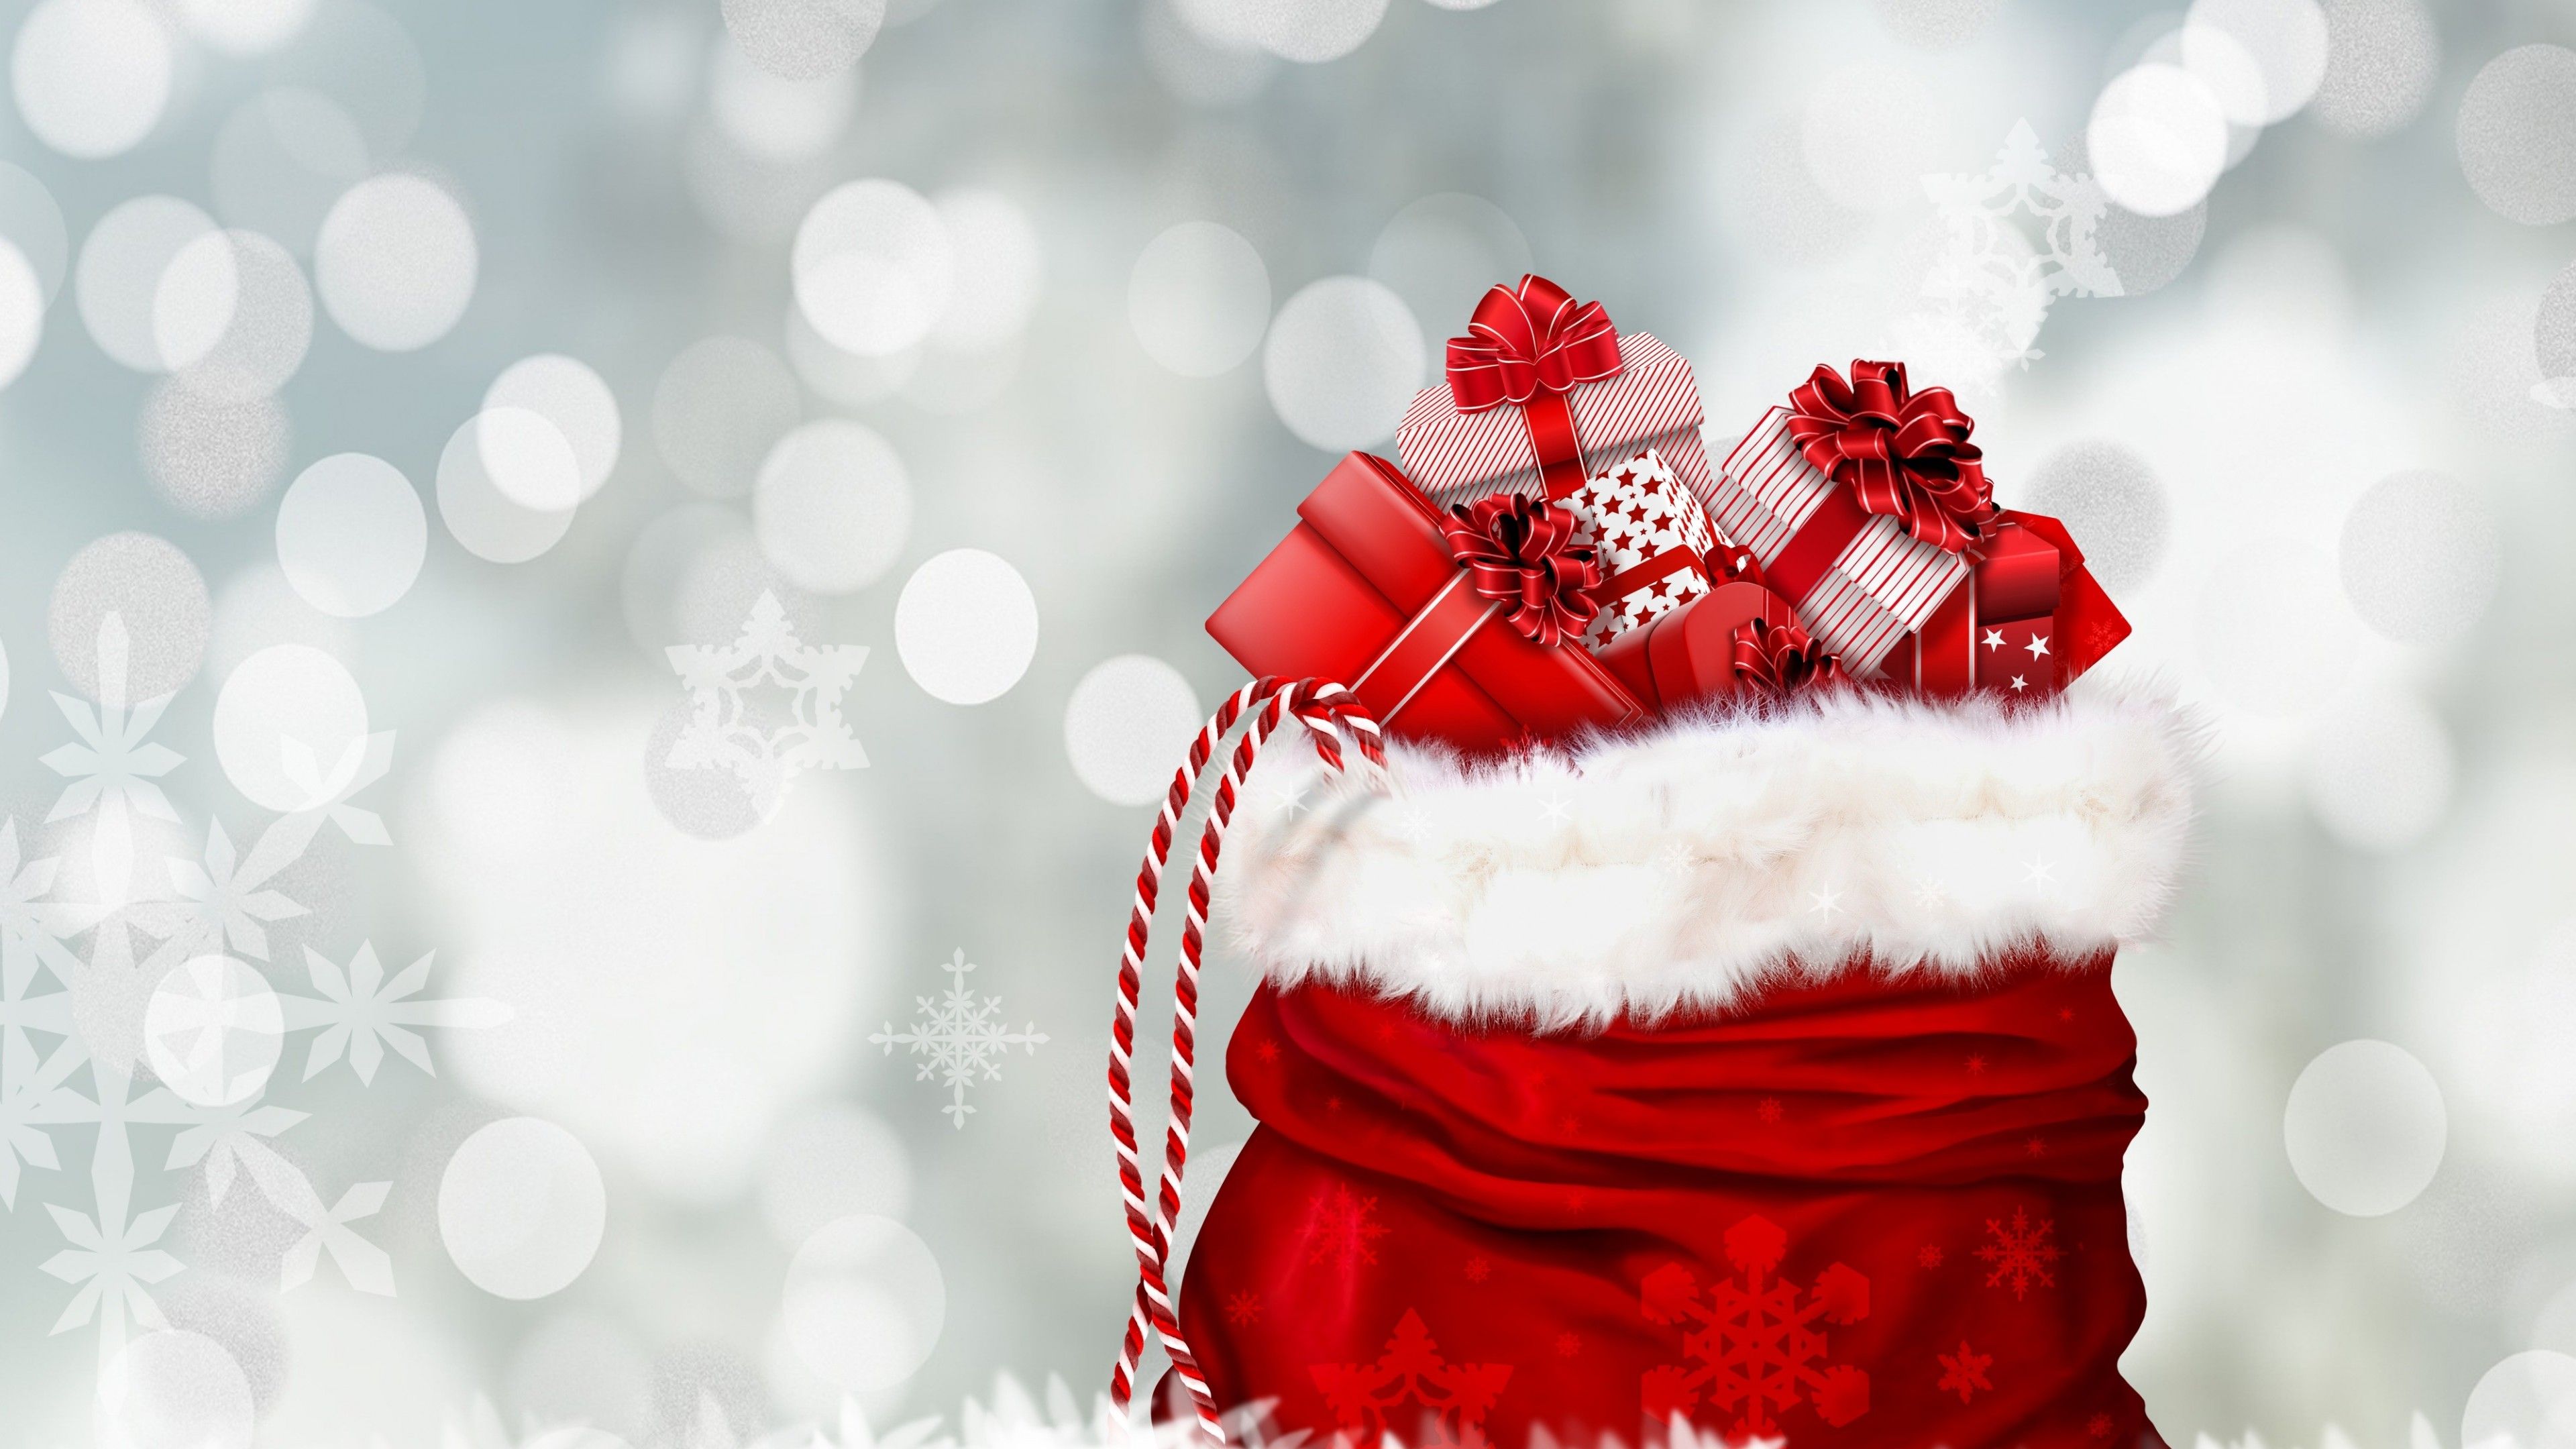 Gifts 4K Wallpaper, Santa's Bag, Presents, Bokeh, Lights, Christmas Eve, Xmas Background, Celebrations Christmas